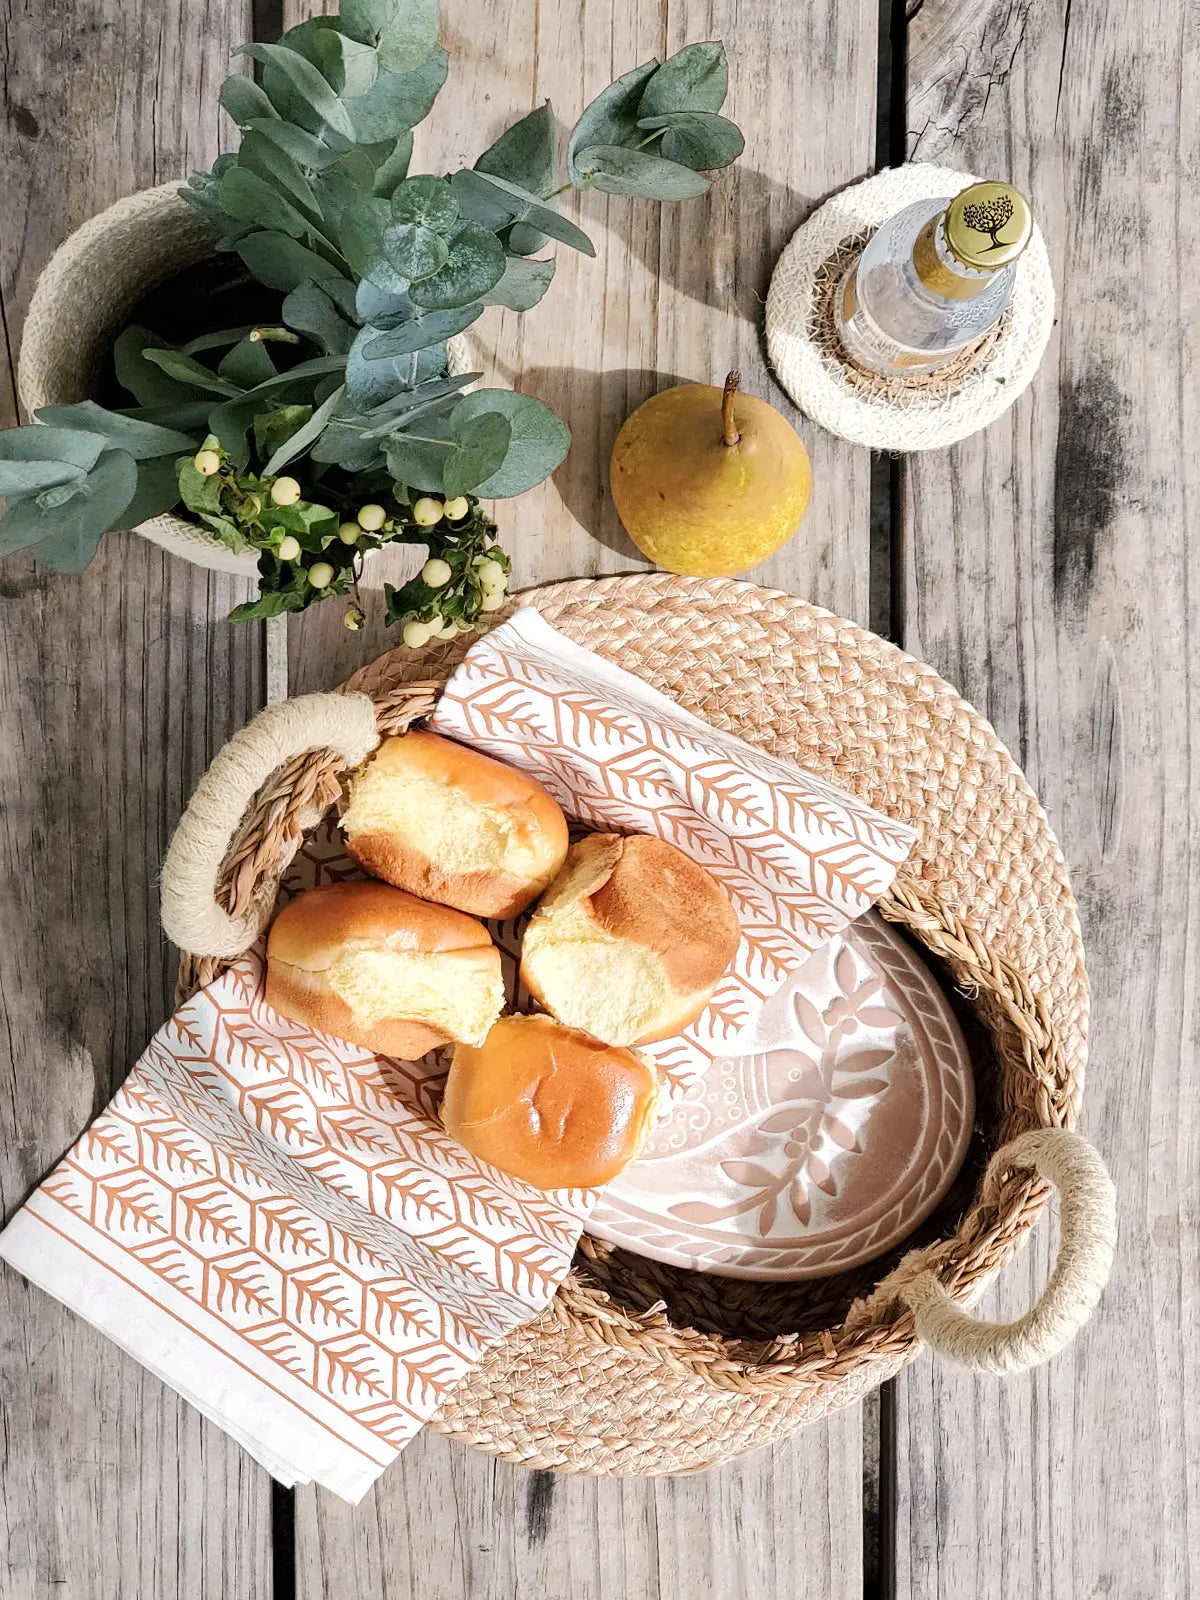 Bread Warmer & Basket Gift Set + Tea Towel - Bird Oval KORISSA